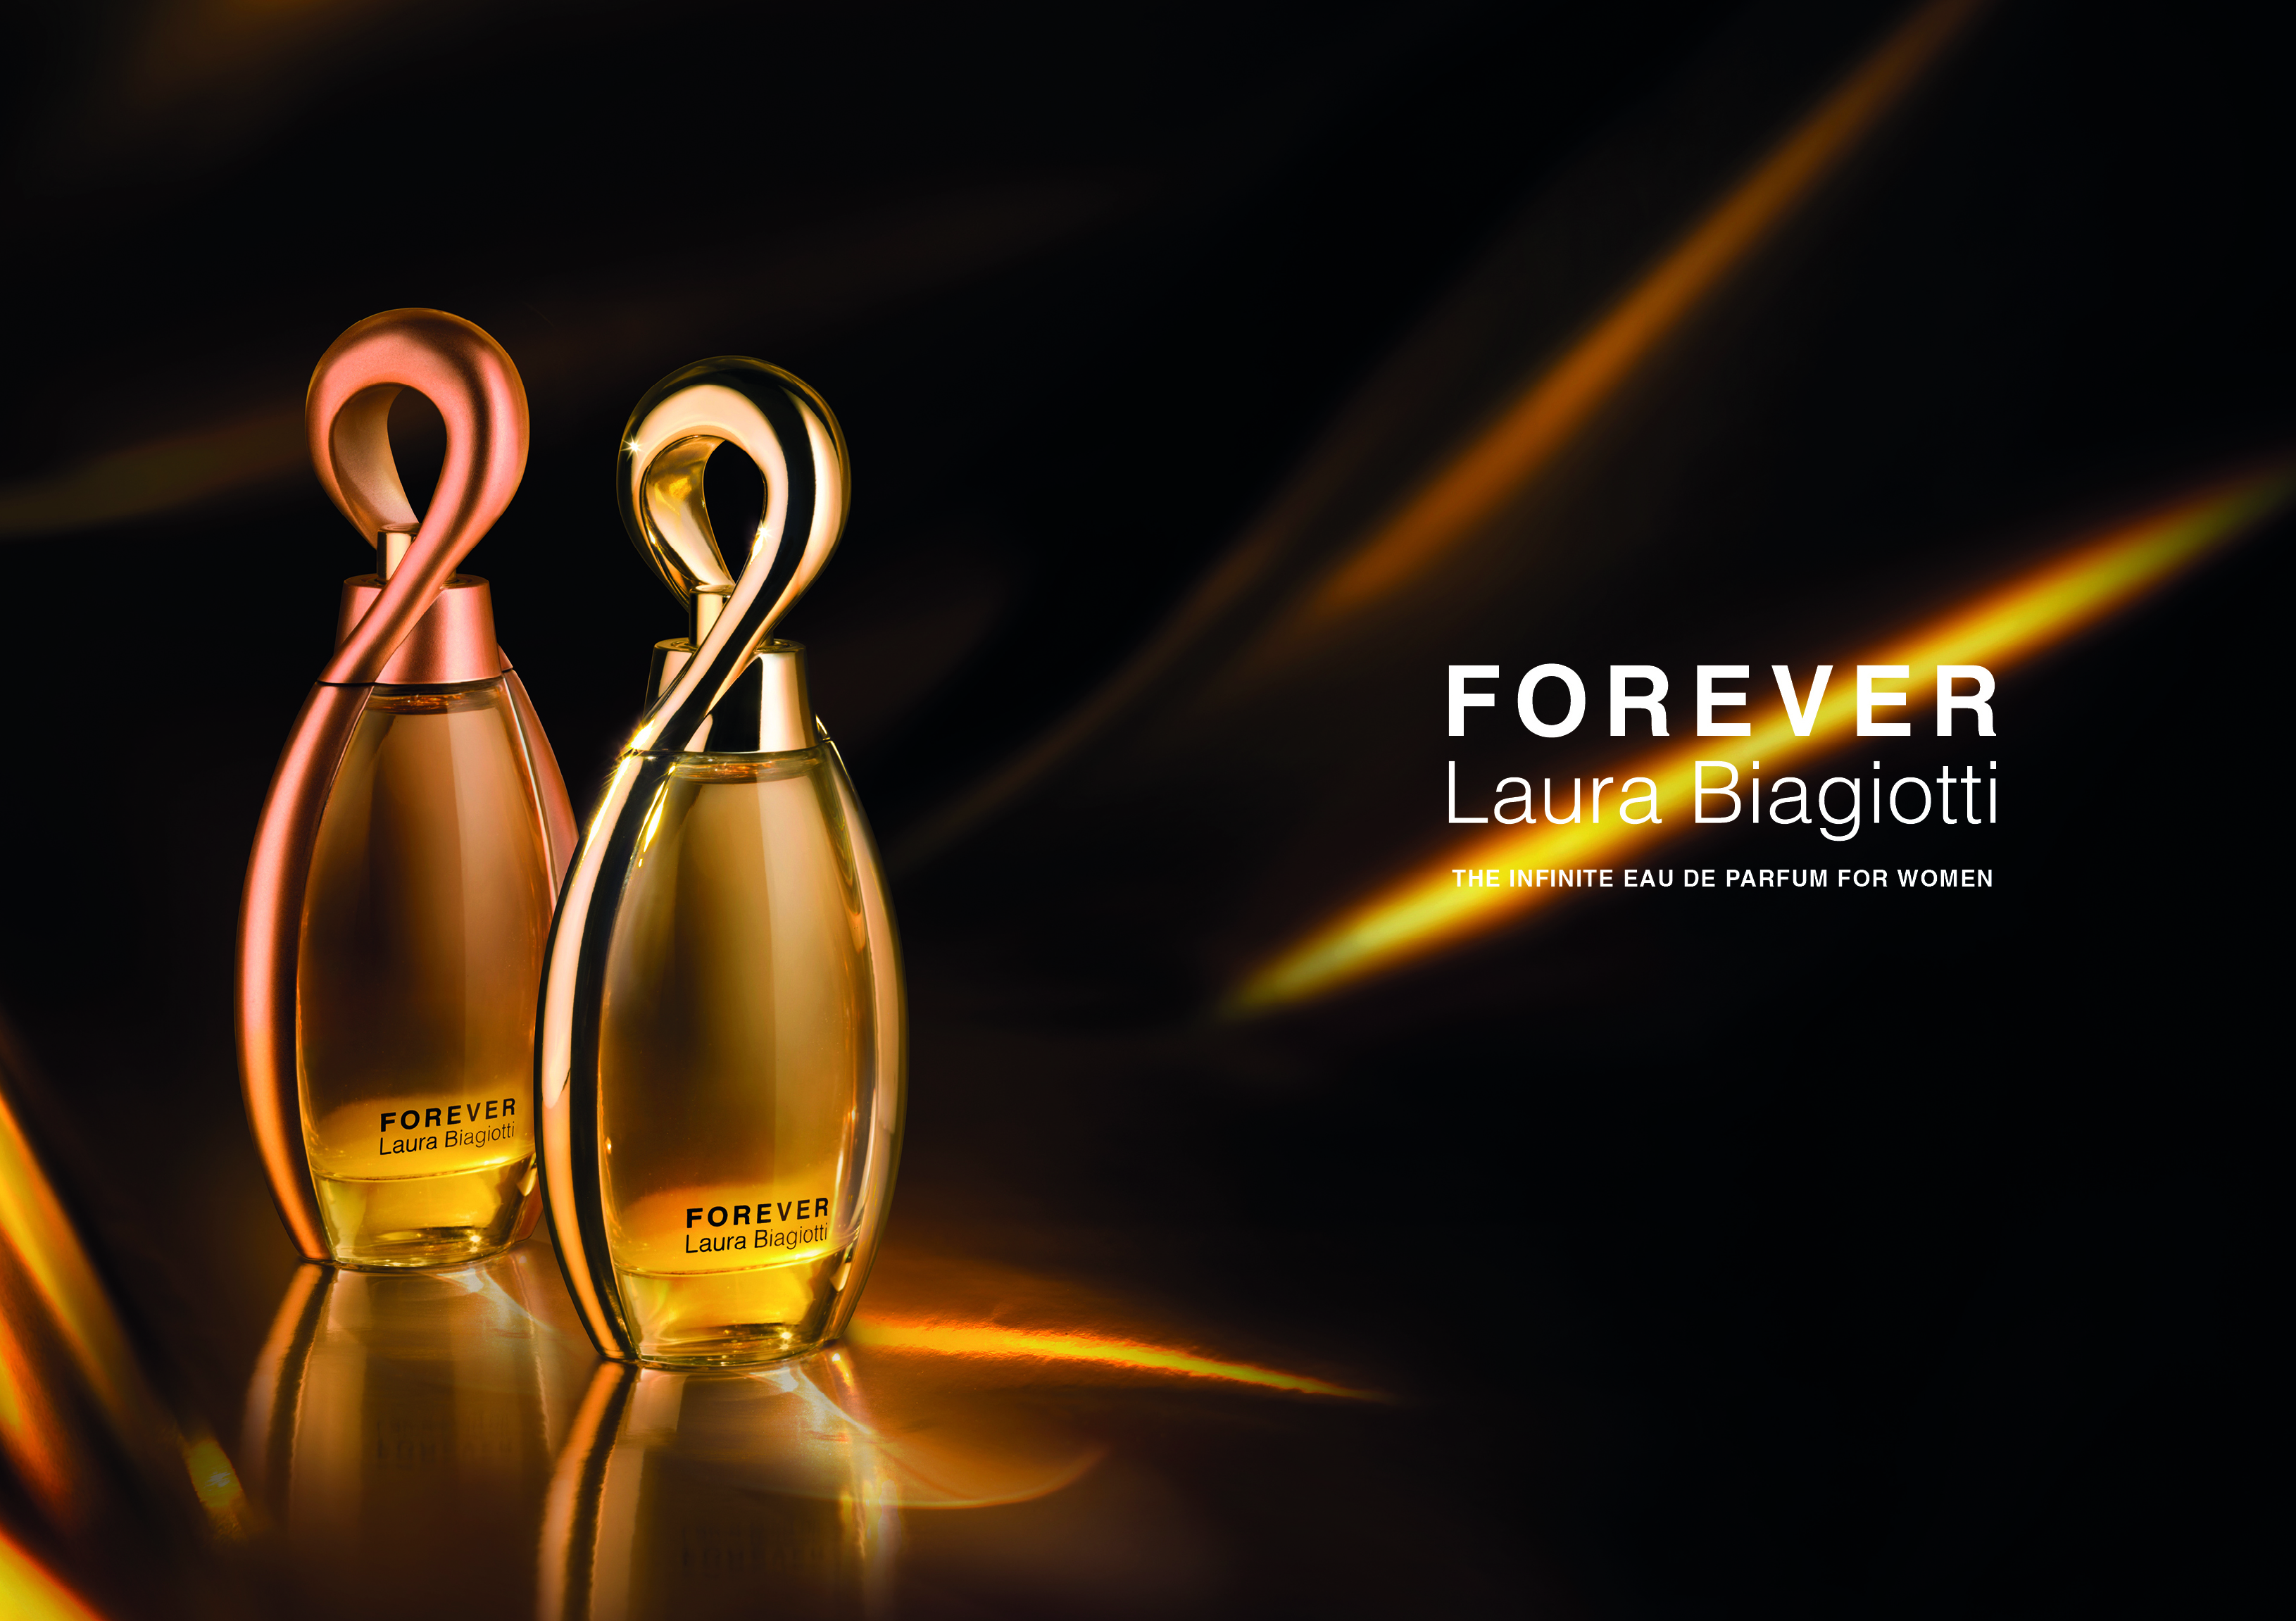 Laura Biagiotti Forever Gold For Her - The Fragrance Of Light! ~ New  Fragrances